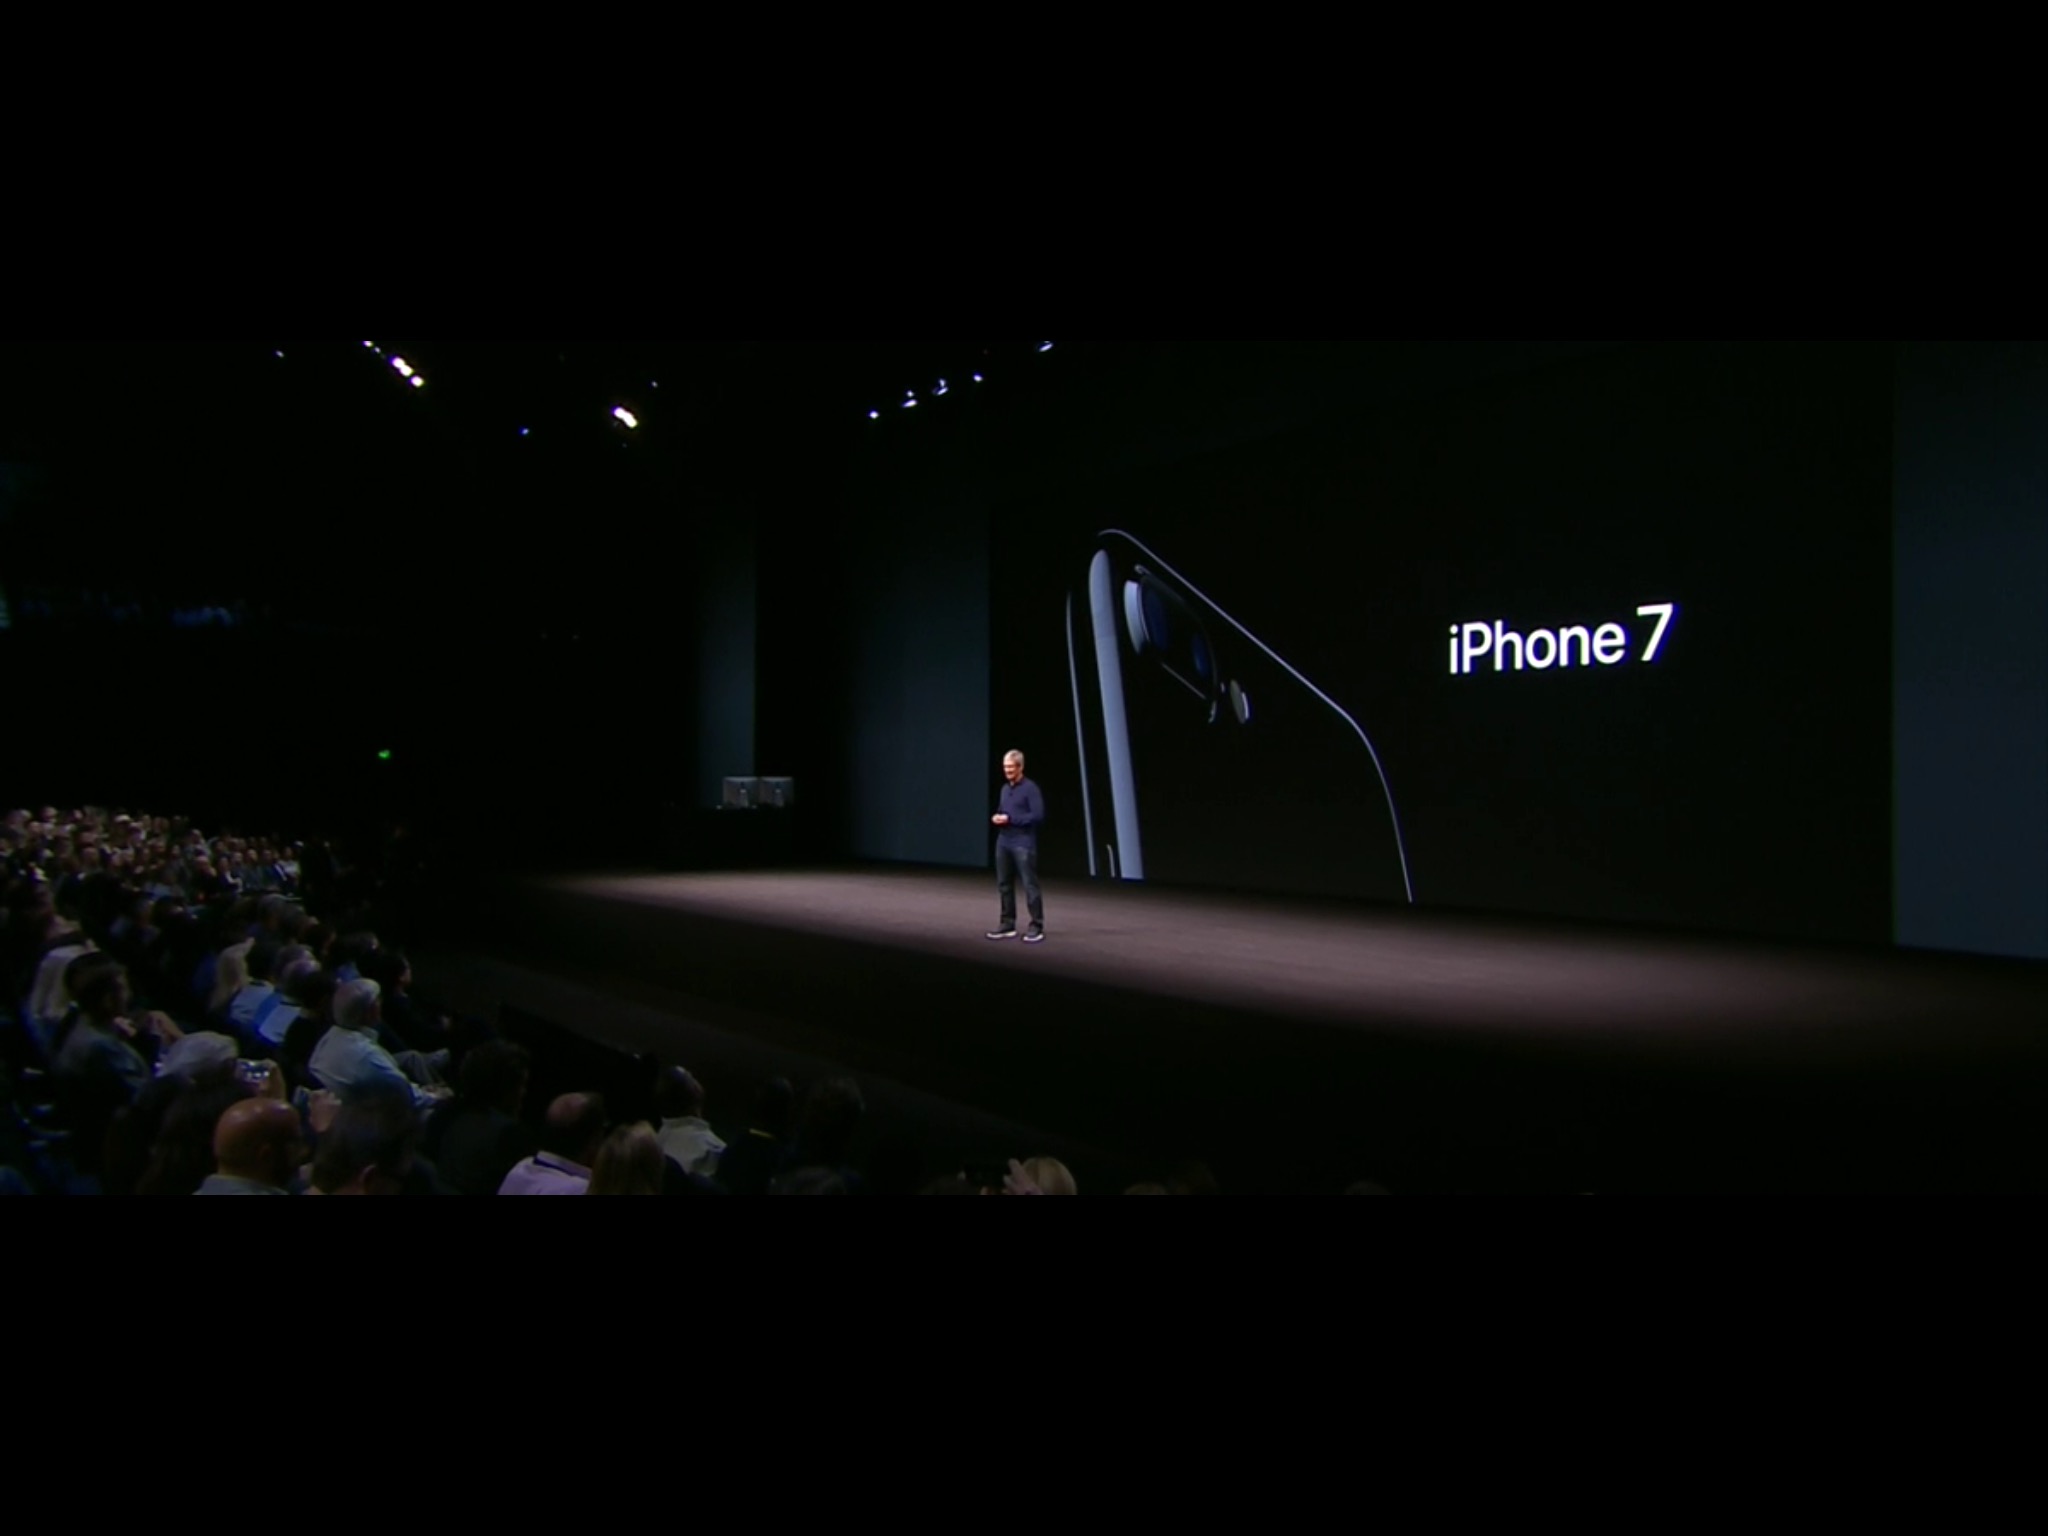 iPhone 7 event